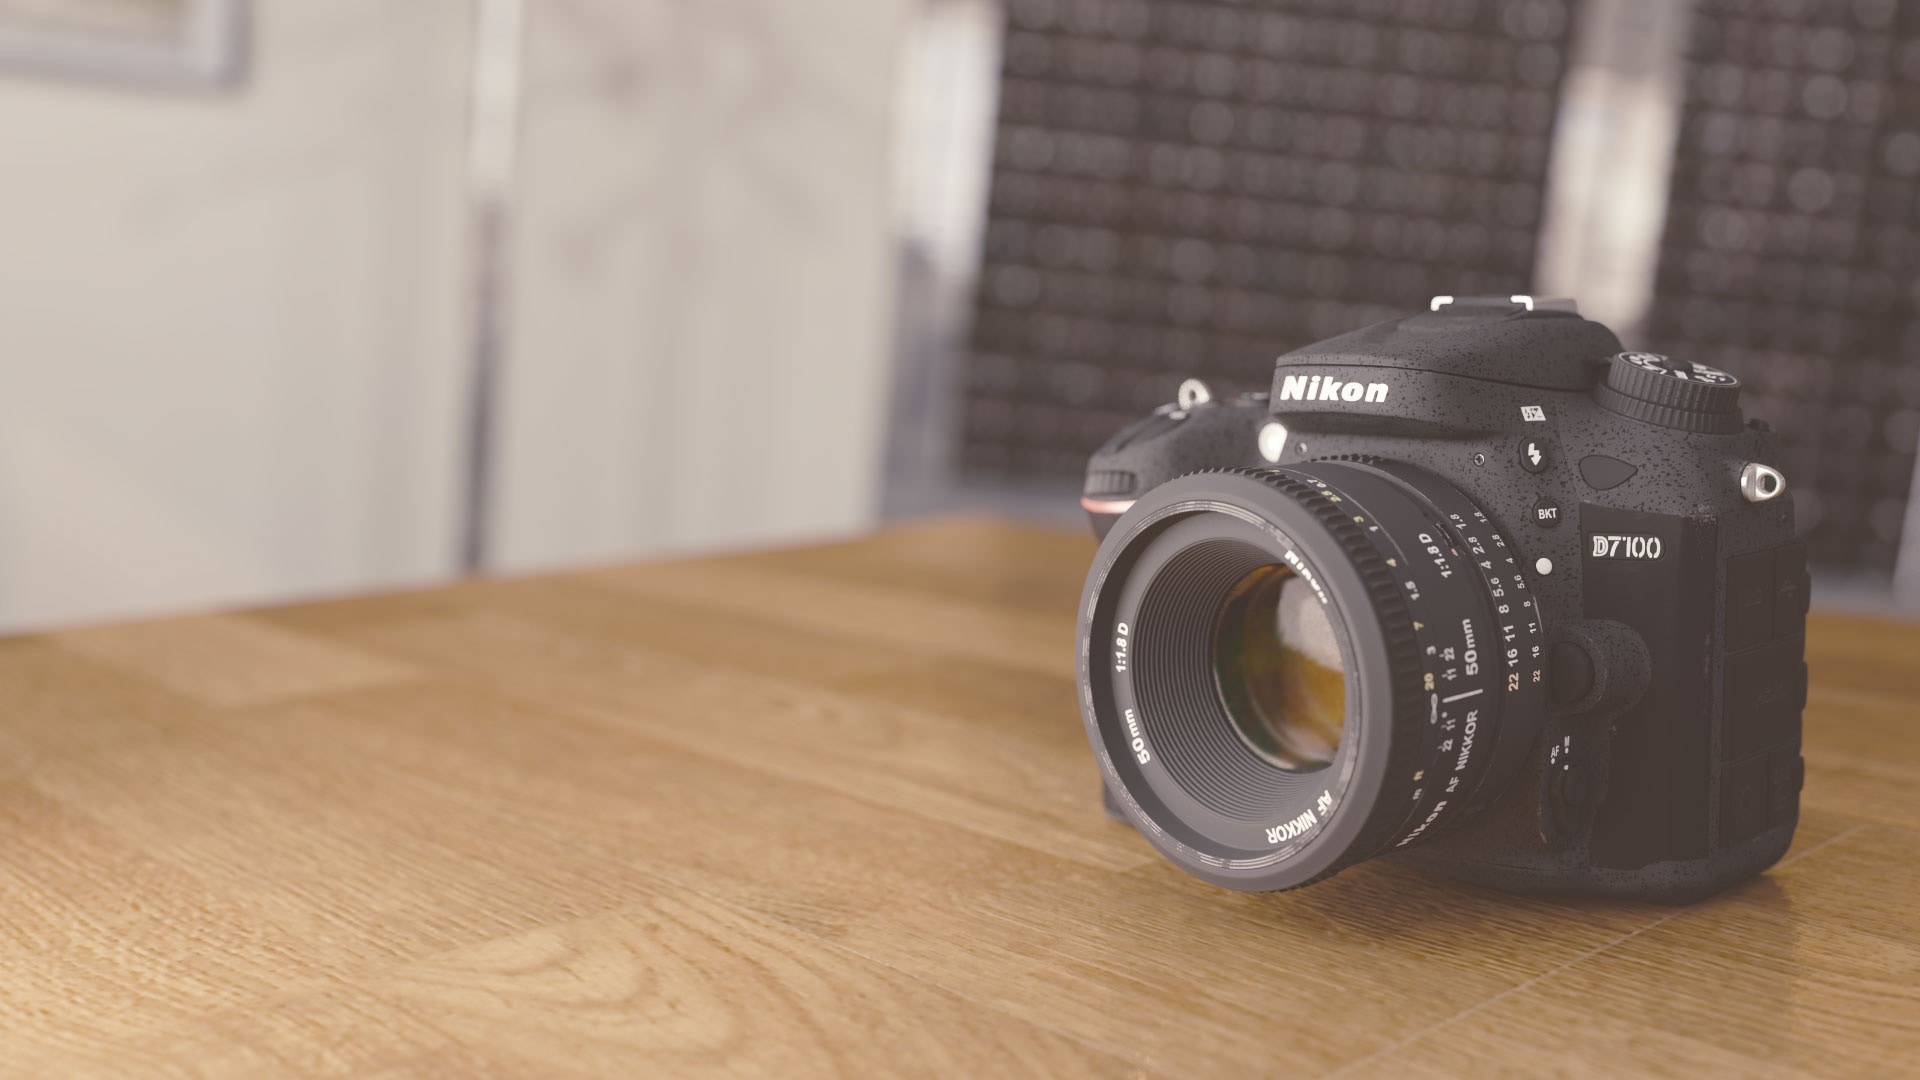 Camera, Nikon Camera, 3D Camera, photography themes, camera - photographic equipment